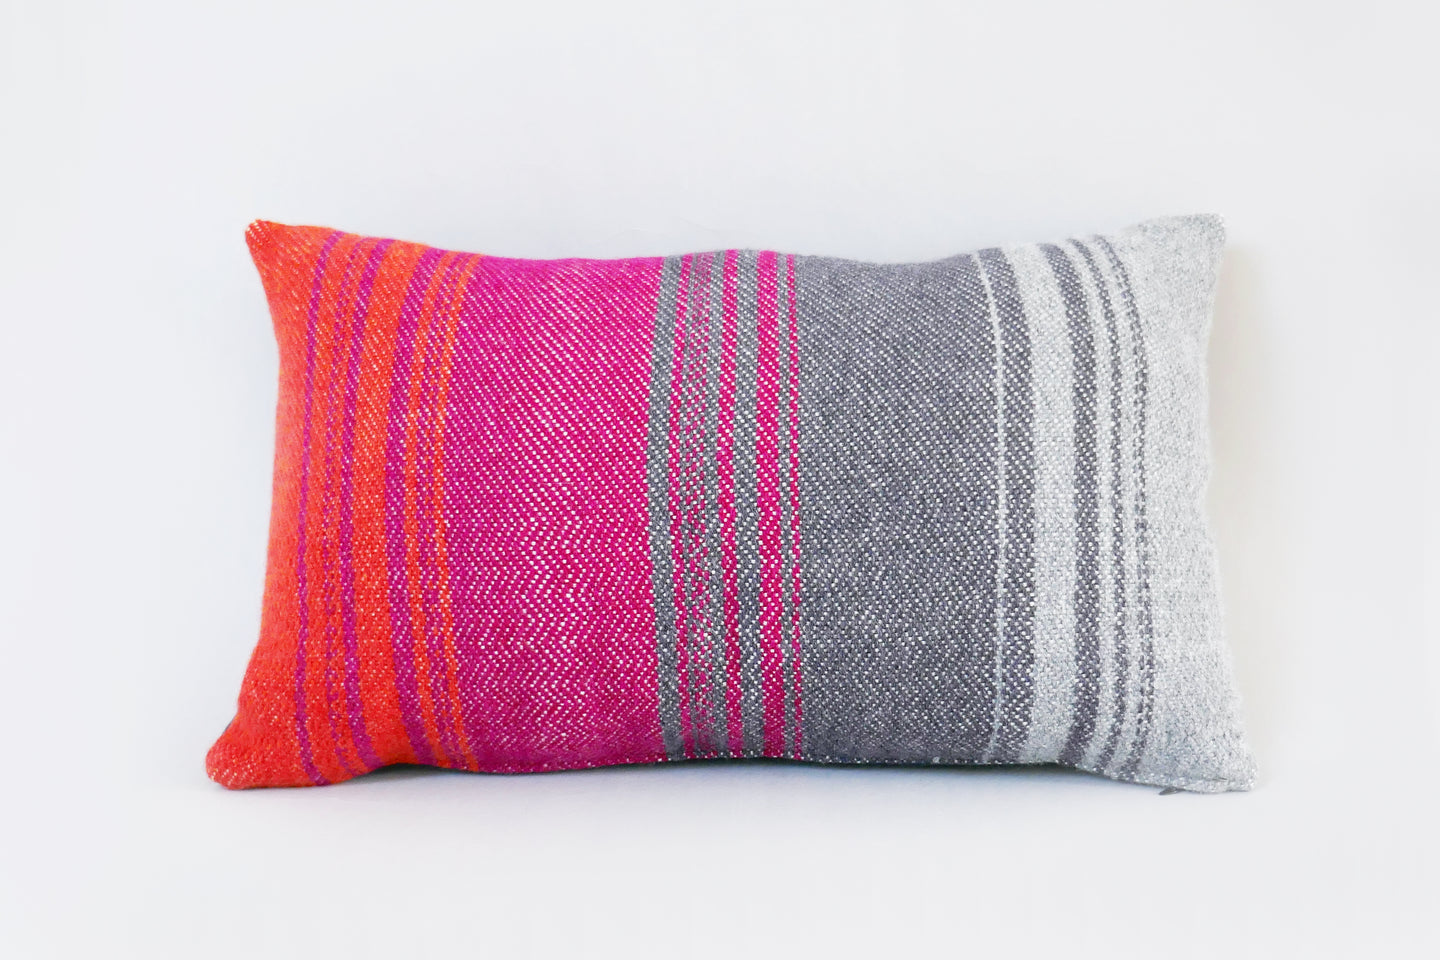 Handwoven cushion by Whelan's Weaving